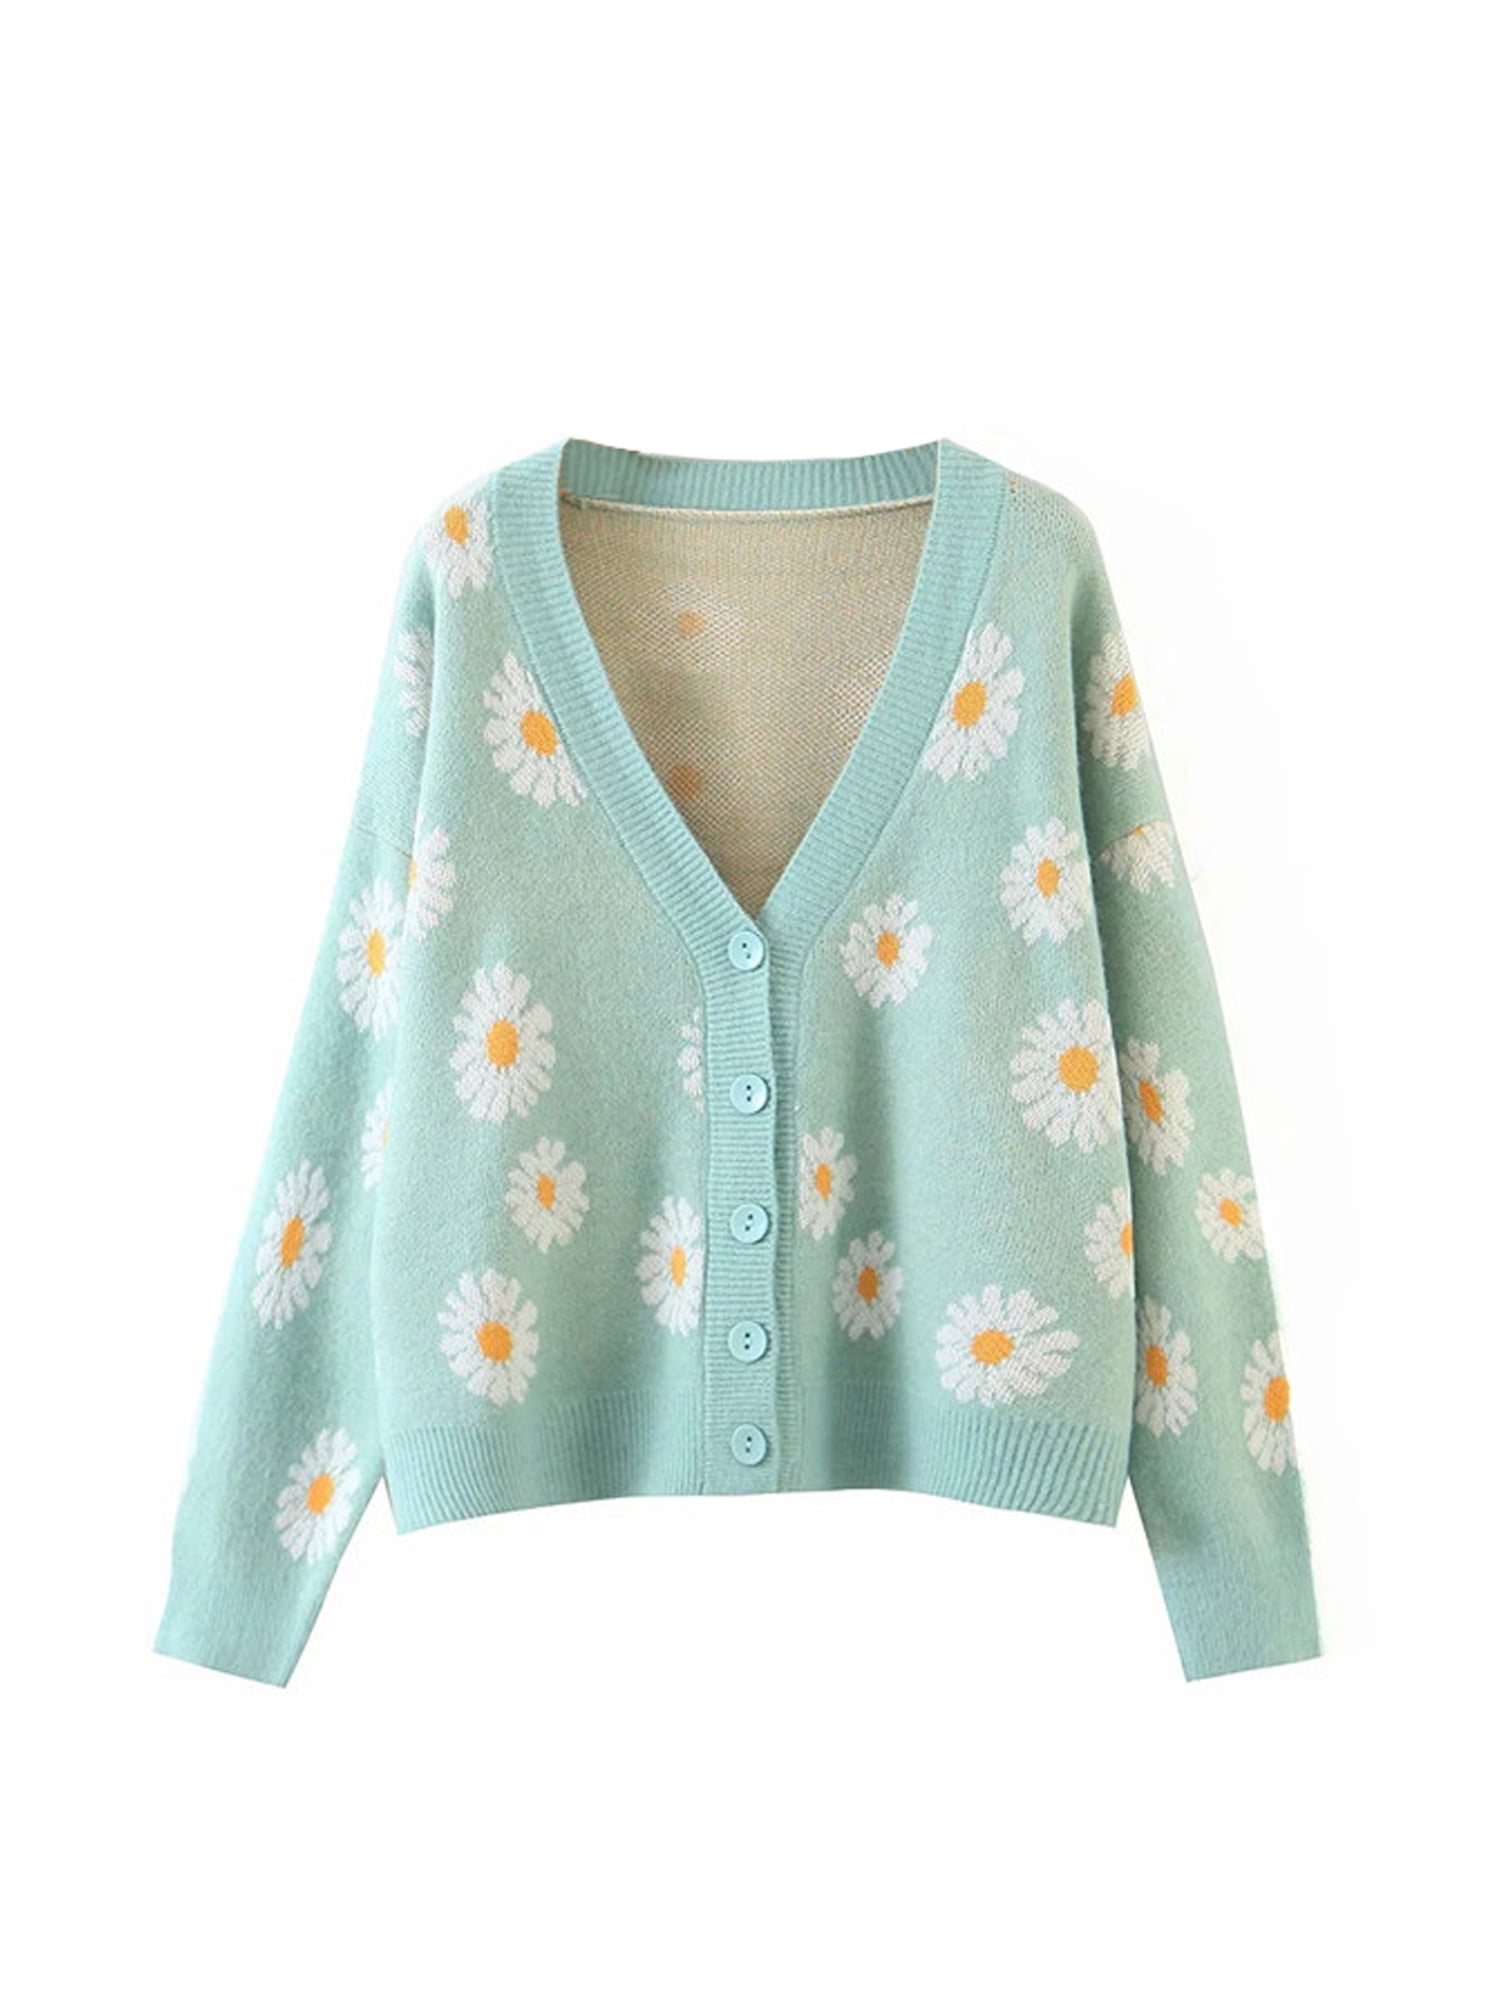 TOPGOD Women Little Daisy Sweater Cardigan, Floral Knit Lossen Neck V Sleeve Long Coat Loose Casual